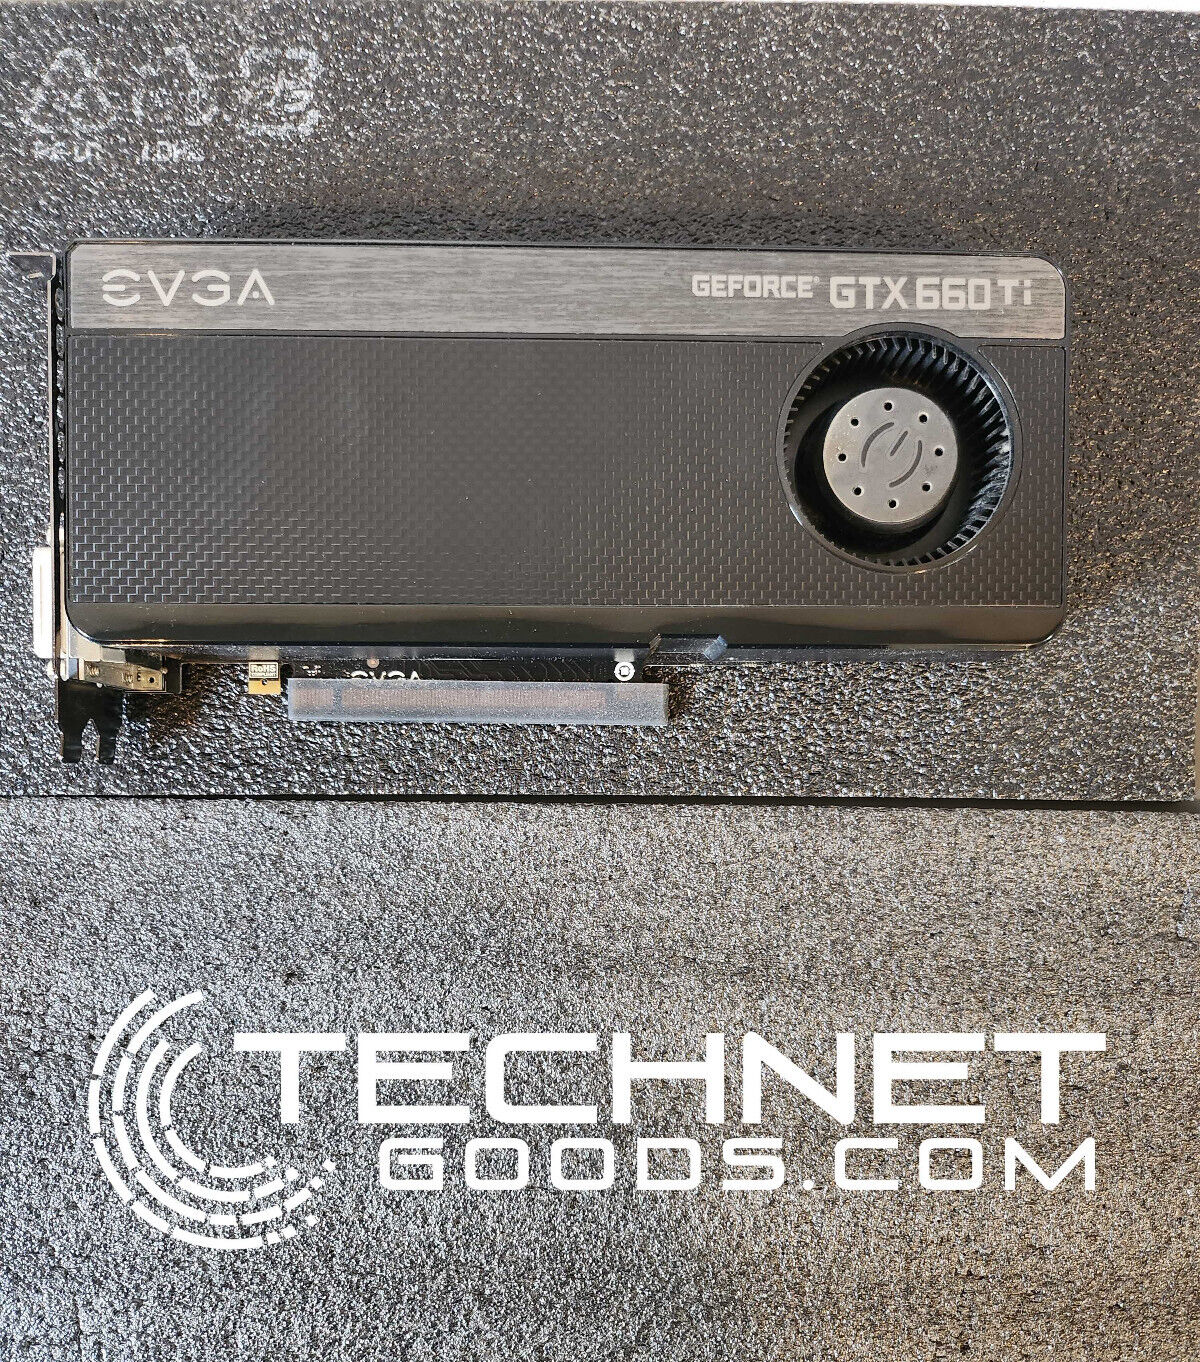 EVGA GTX 660 Ti 2GB GDDR5 - TESTED